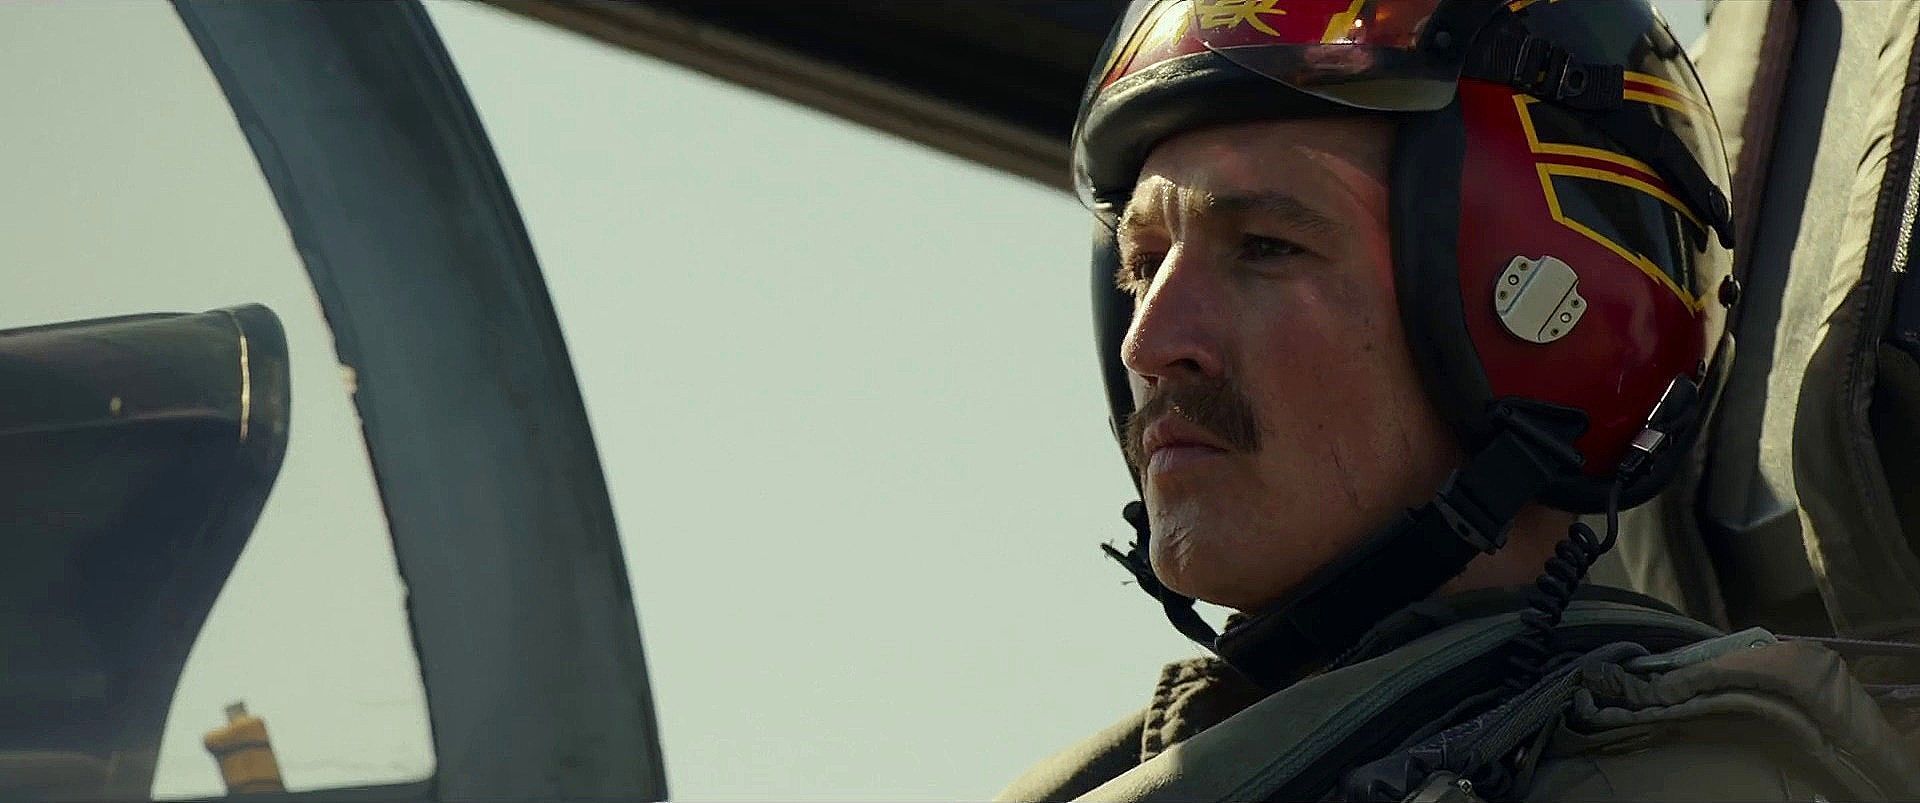 Top Gun: Maverick” Movie “Mustang” on Display at Planes of Fame